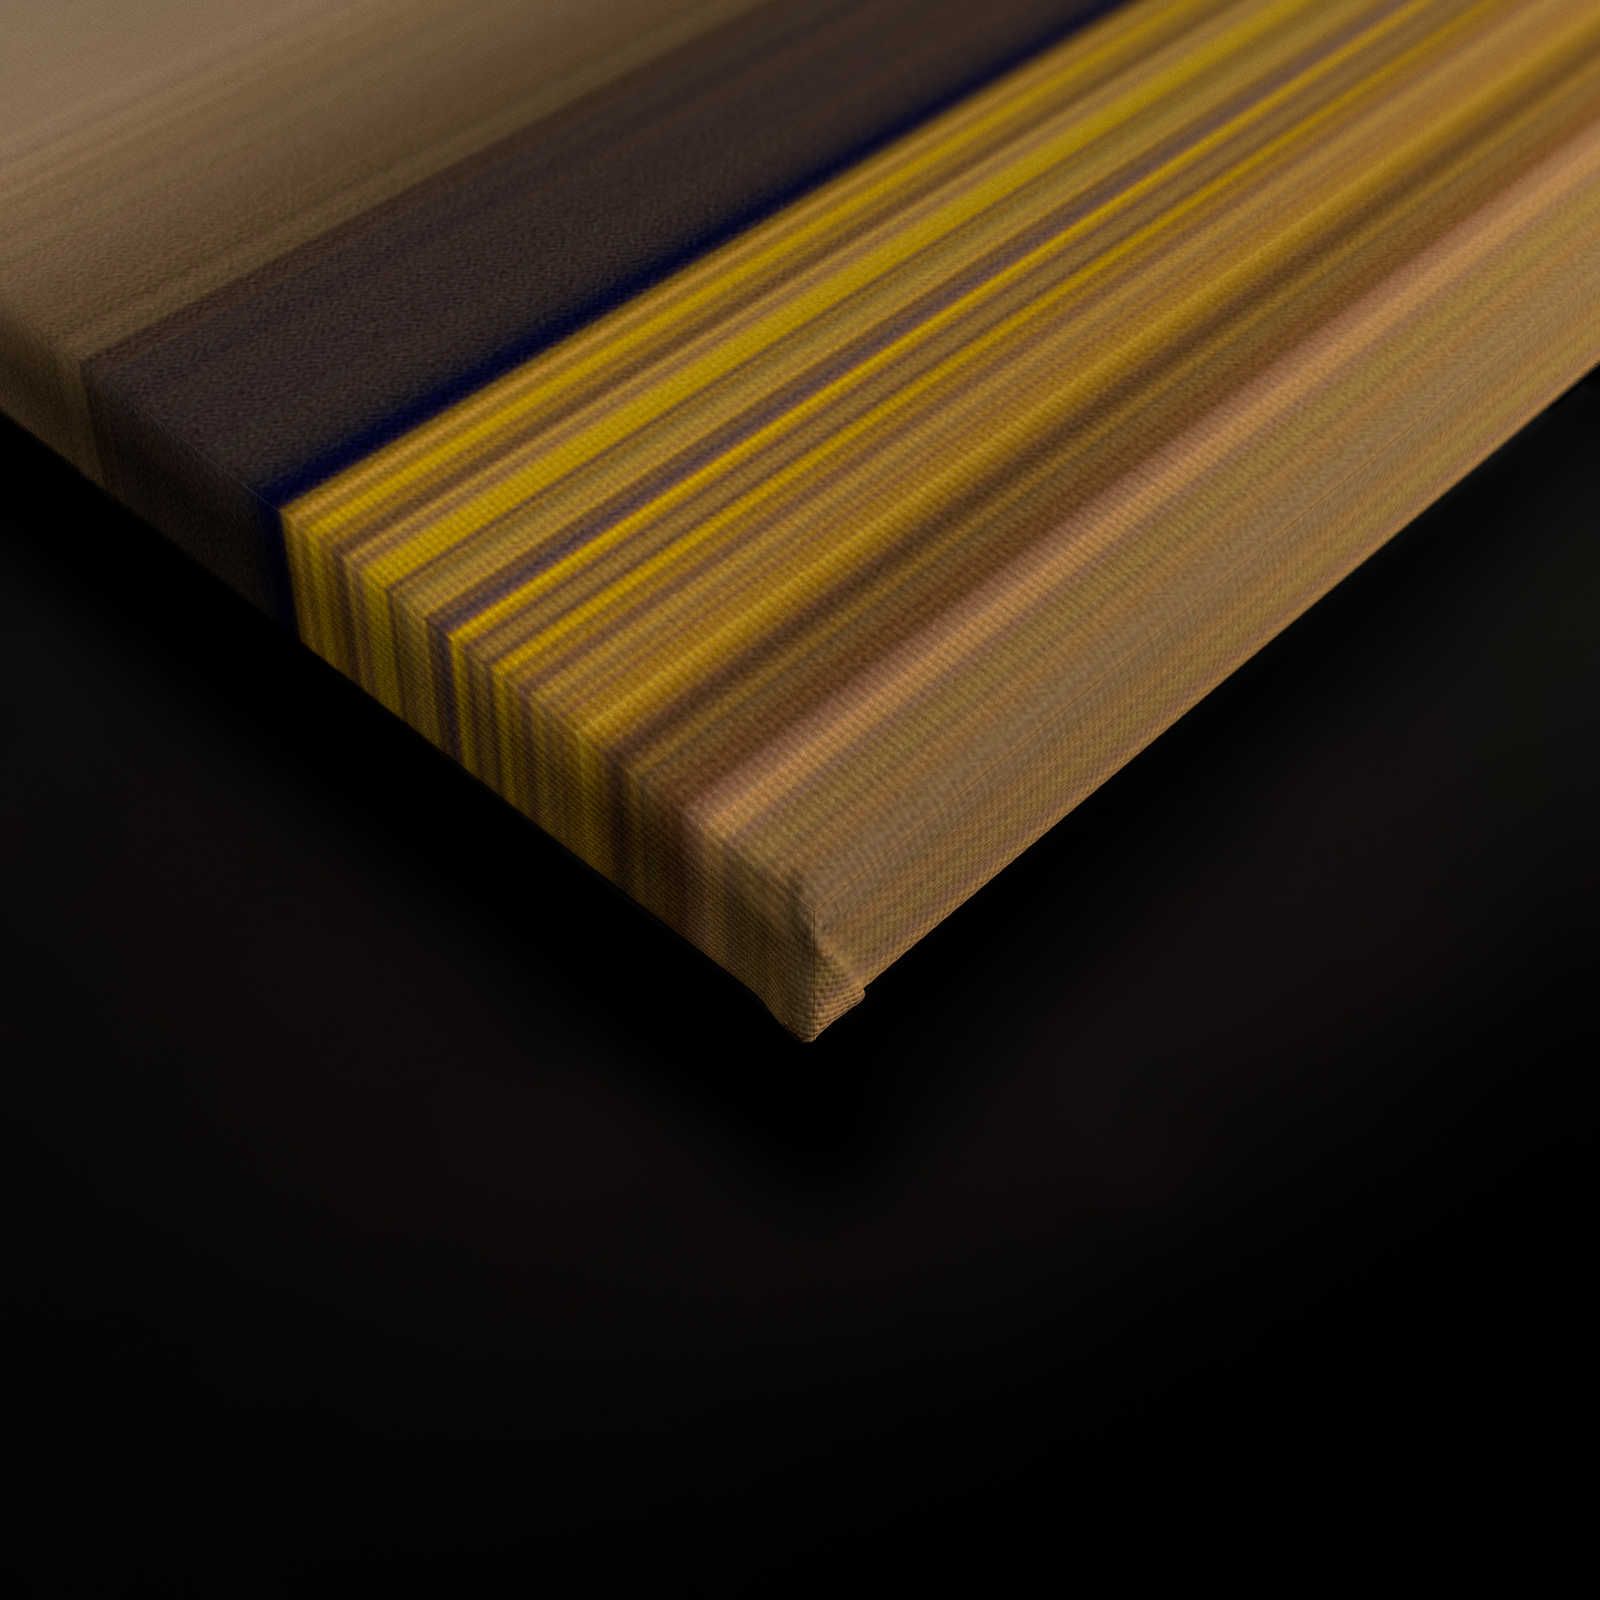             Horizon 3 - Lienzo Paisaje abstracto con diseño de colores - 0,90 m x 0,60 m
        